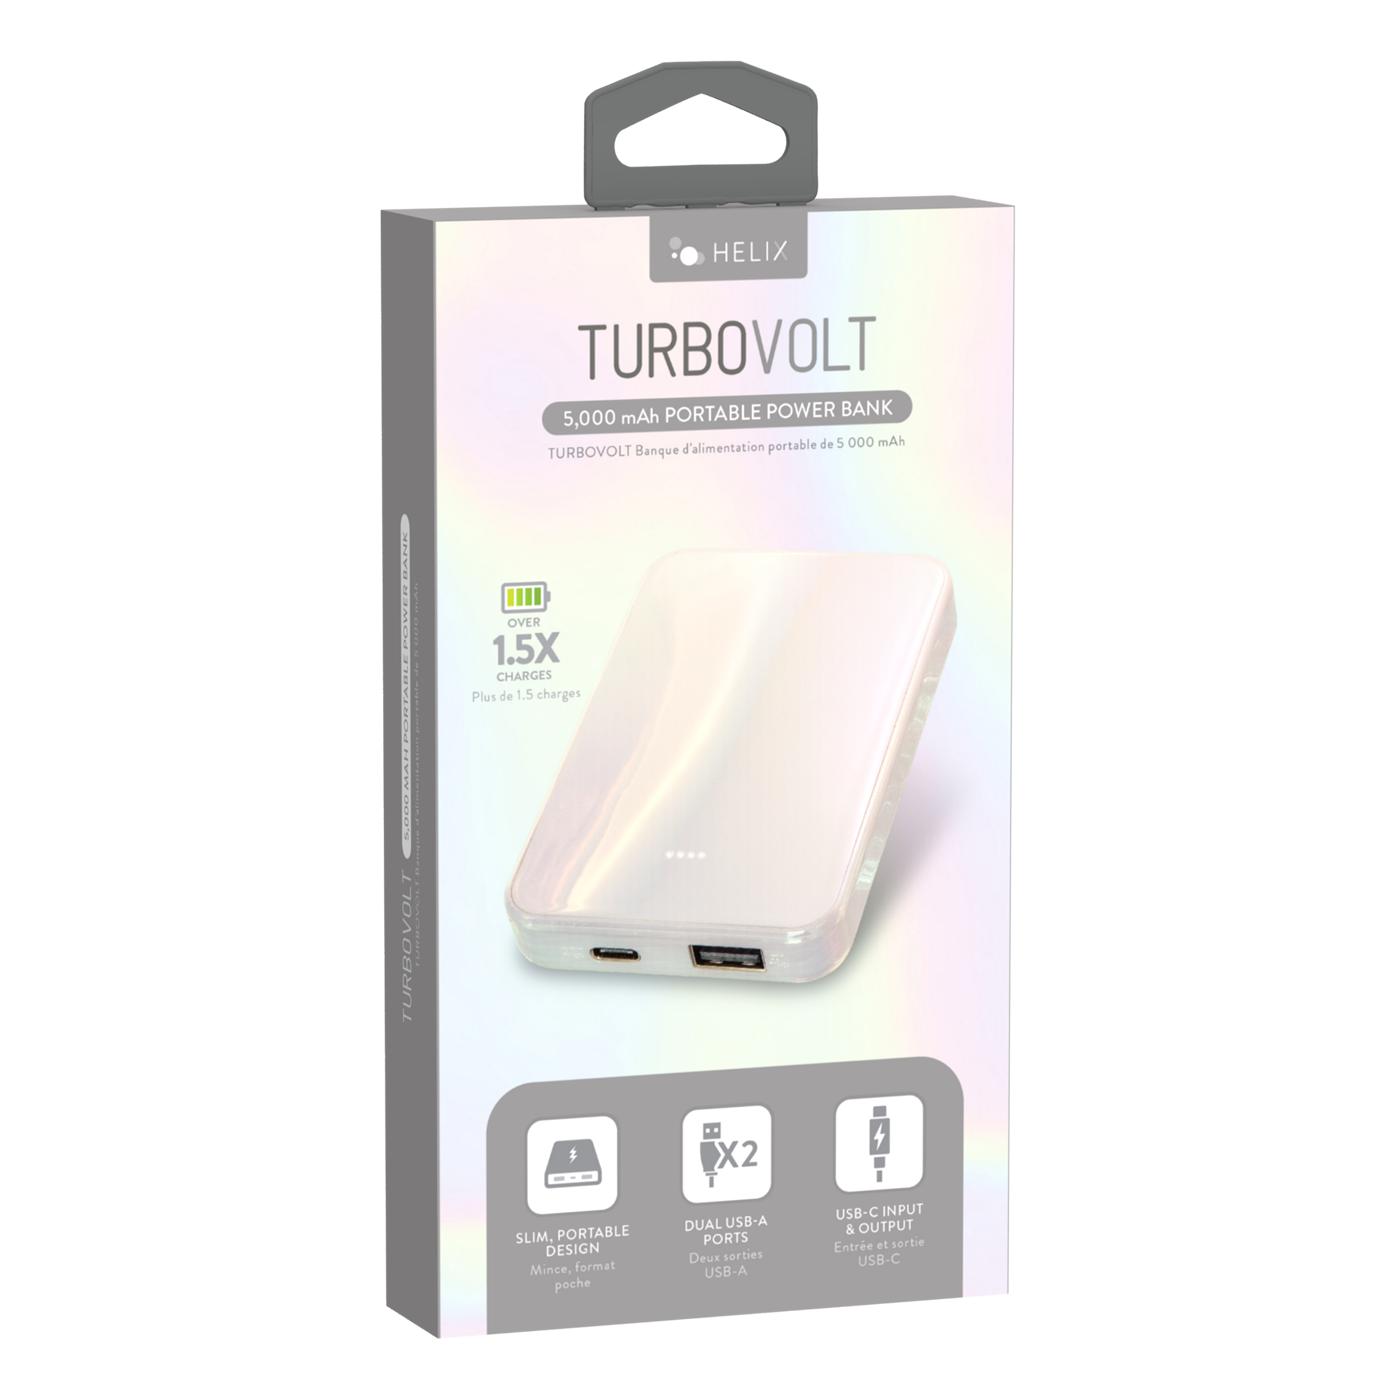 Helix TurboVolt 5,000 mAh Portable Power Bank - White; image 1 of 2